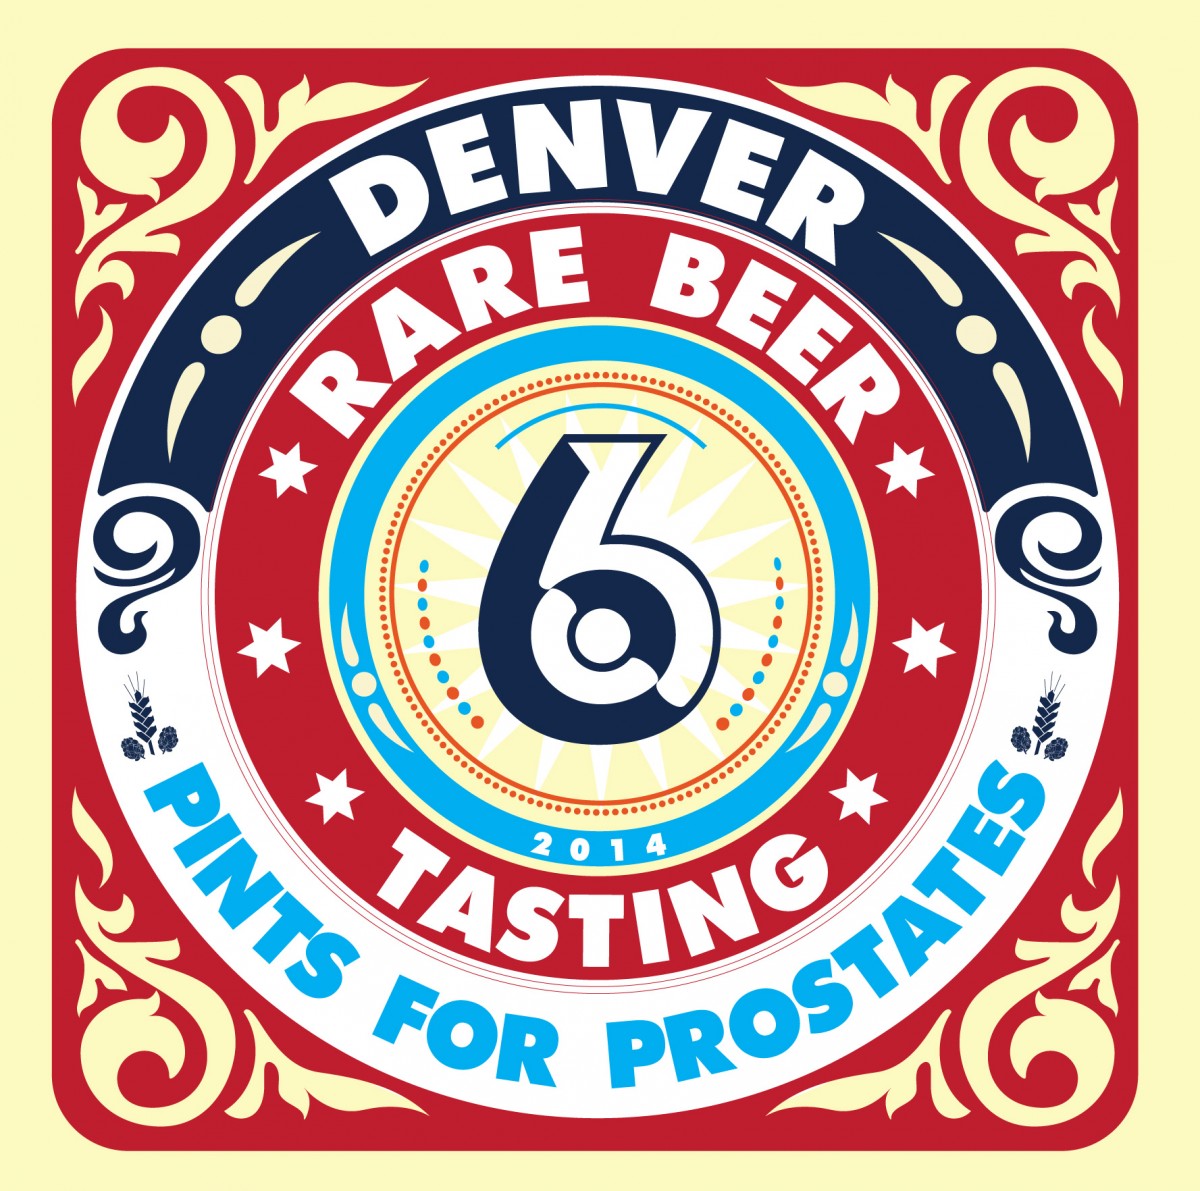 Denver Rare Beer Tasting VI Beer List Features Brews from 50 Craft Brewers